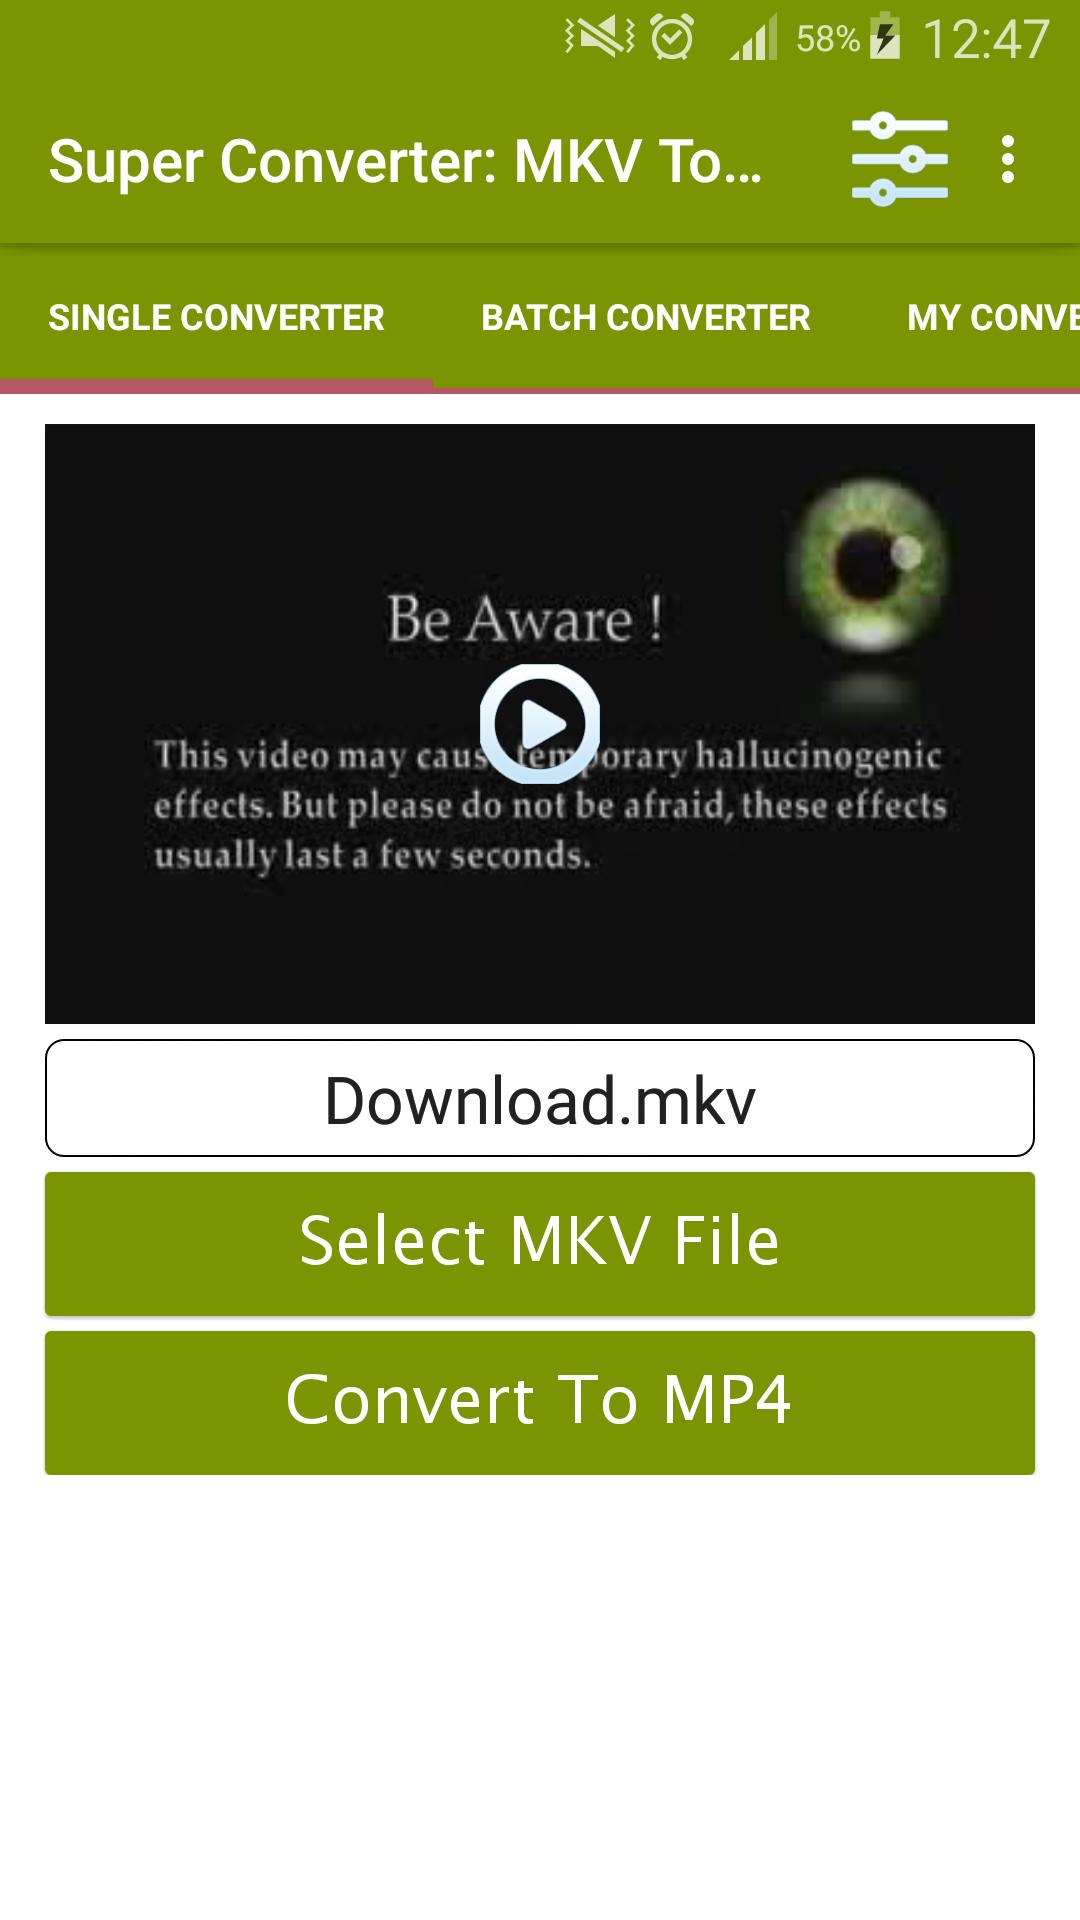 Super Converter : MKV To MP4 for Android - APK Download